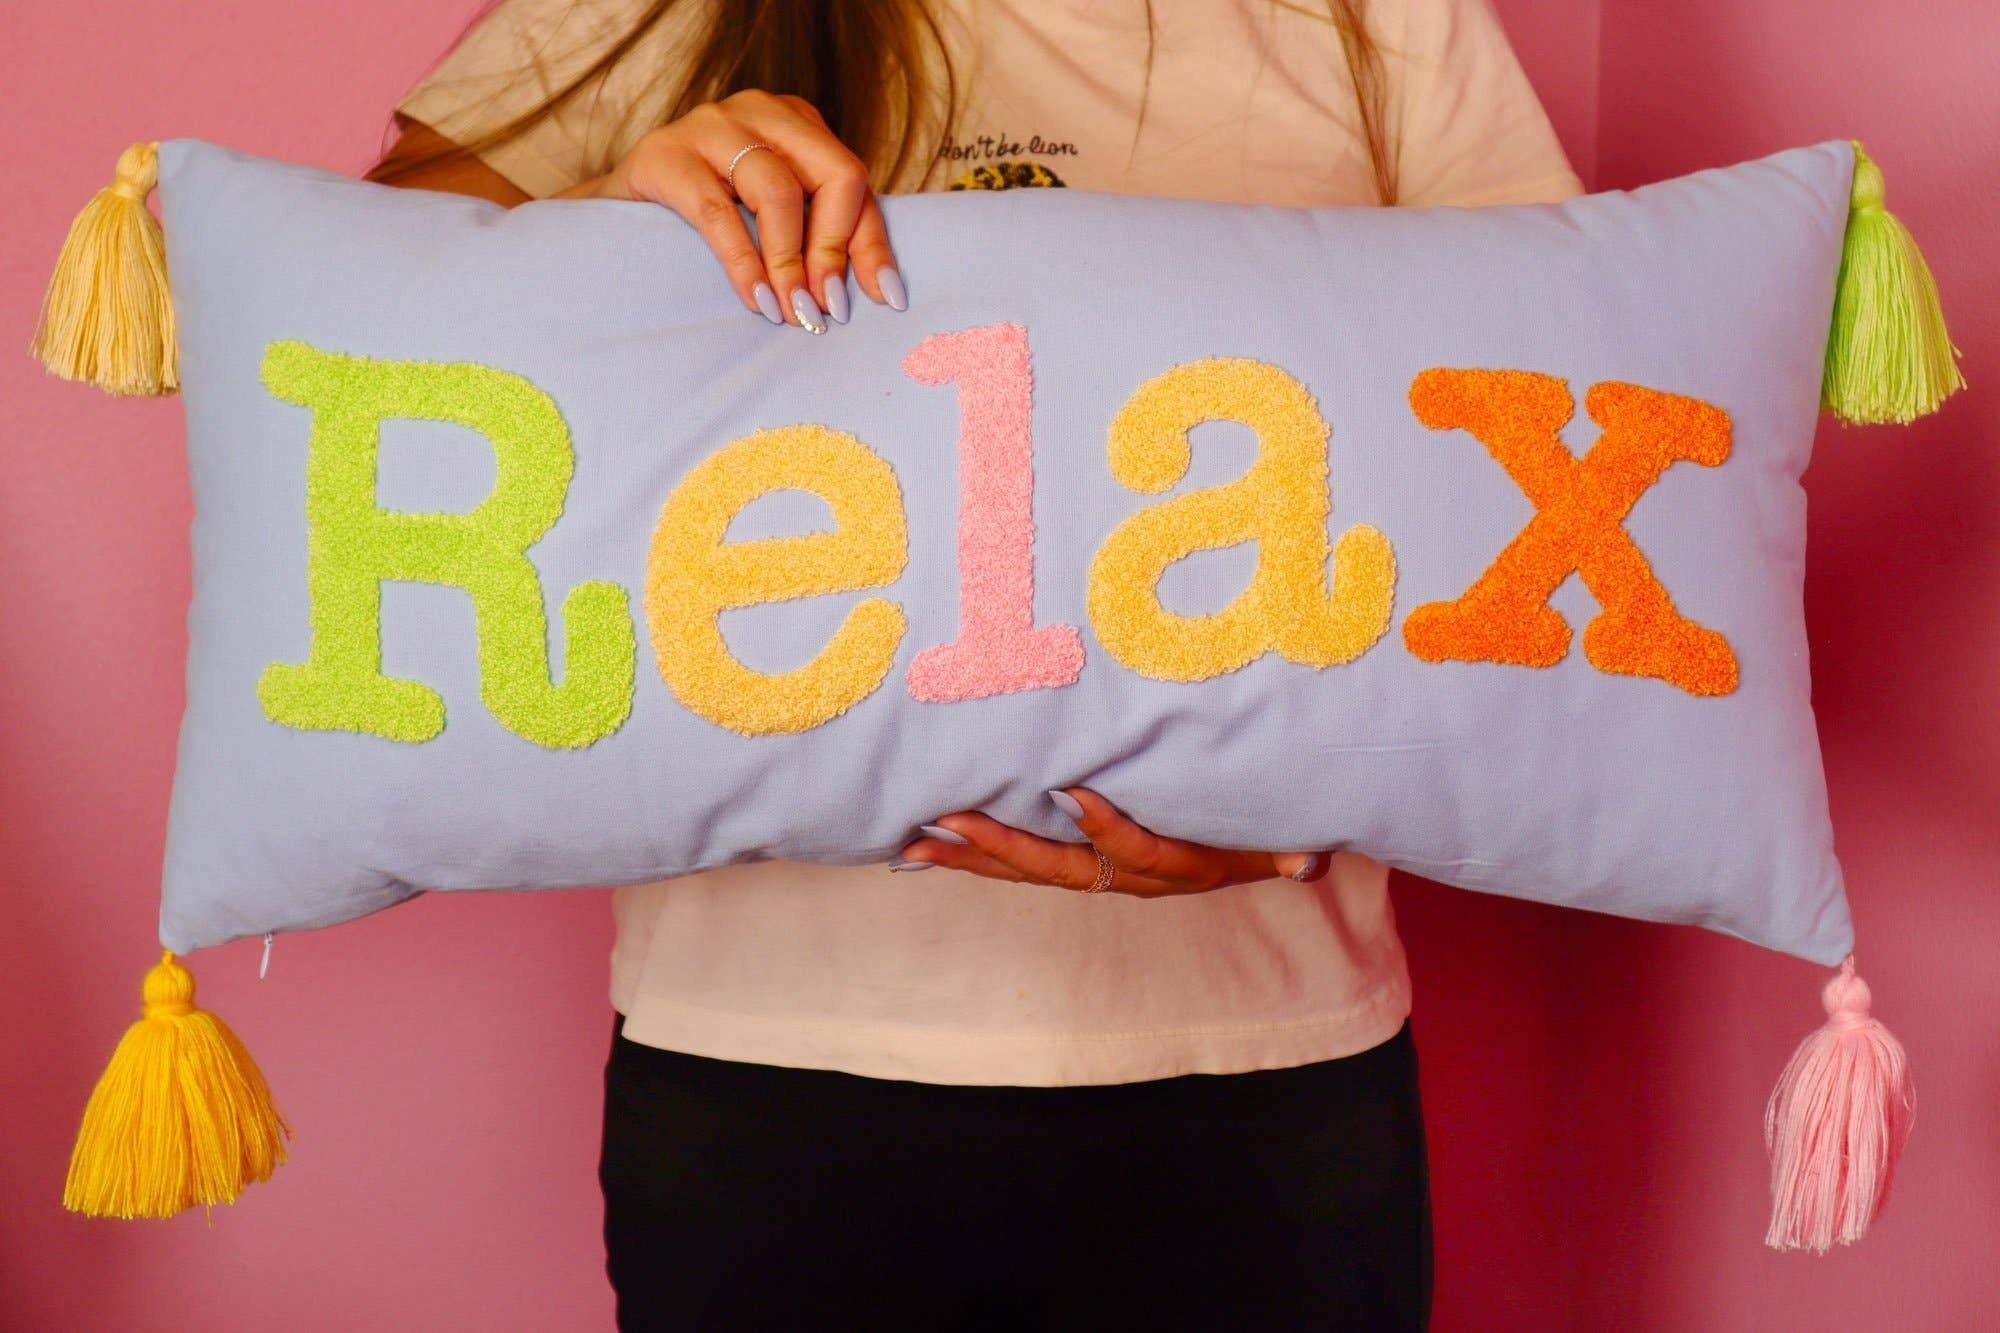 horizontal throw pillow that says RELAX on it